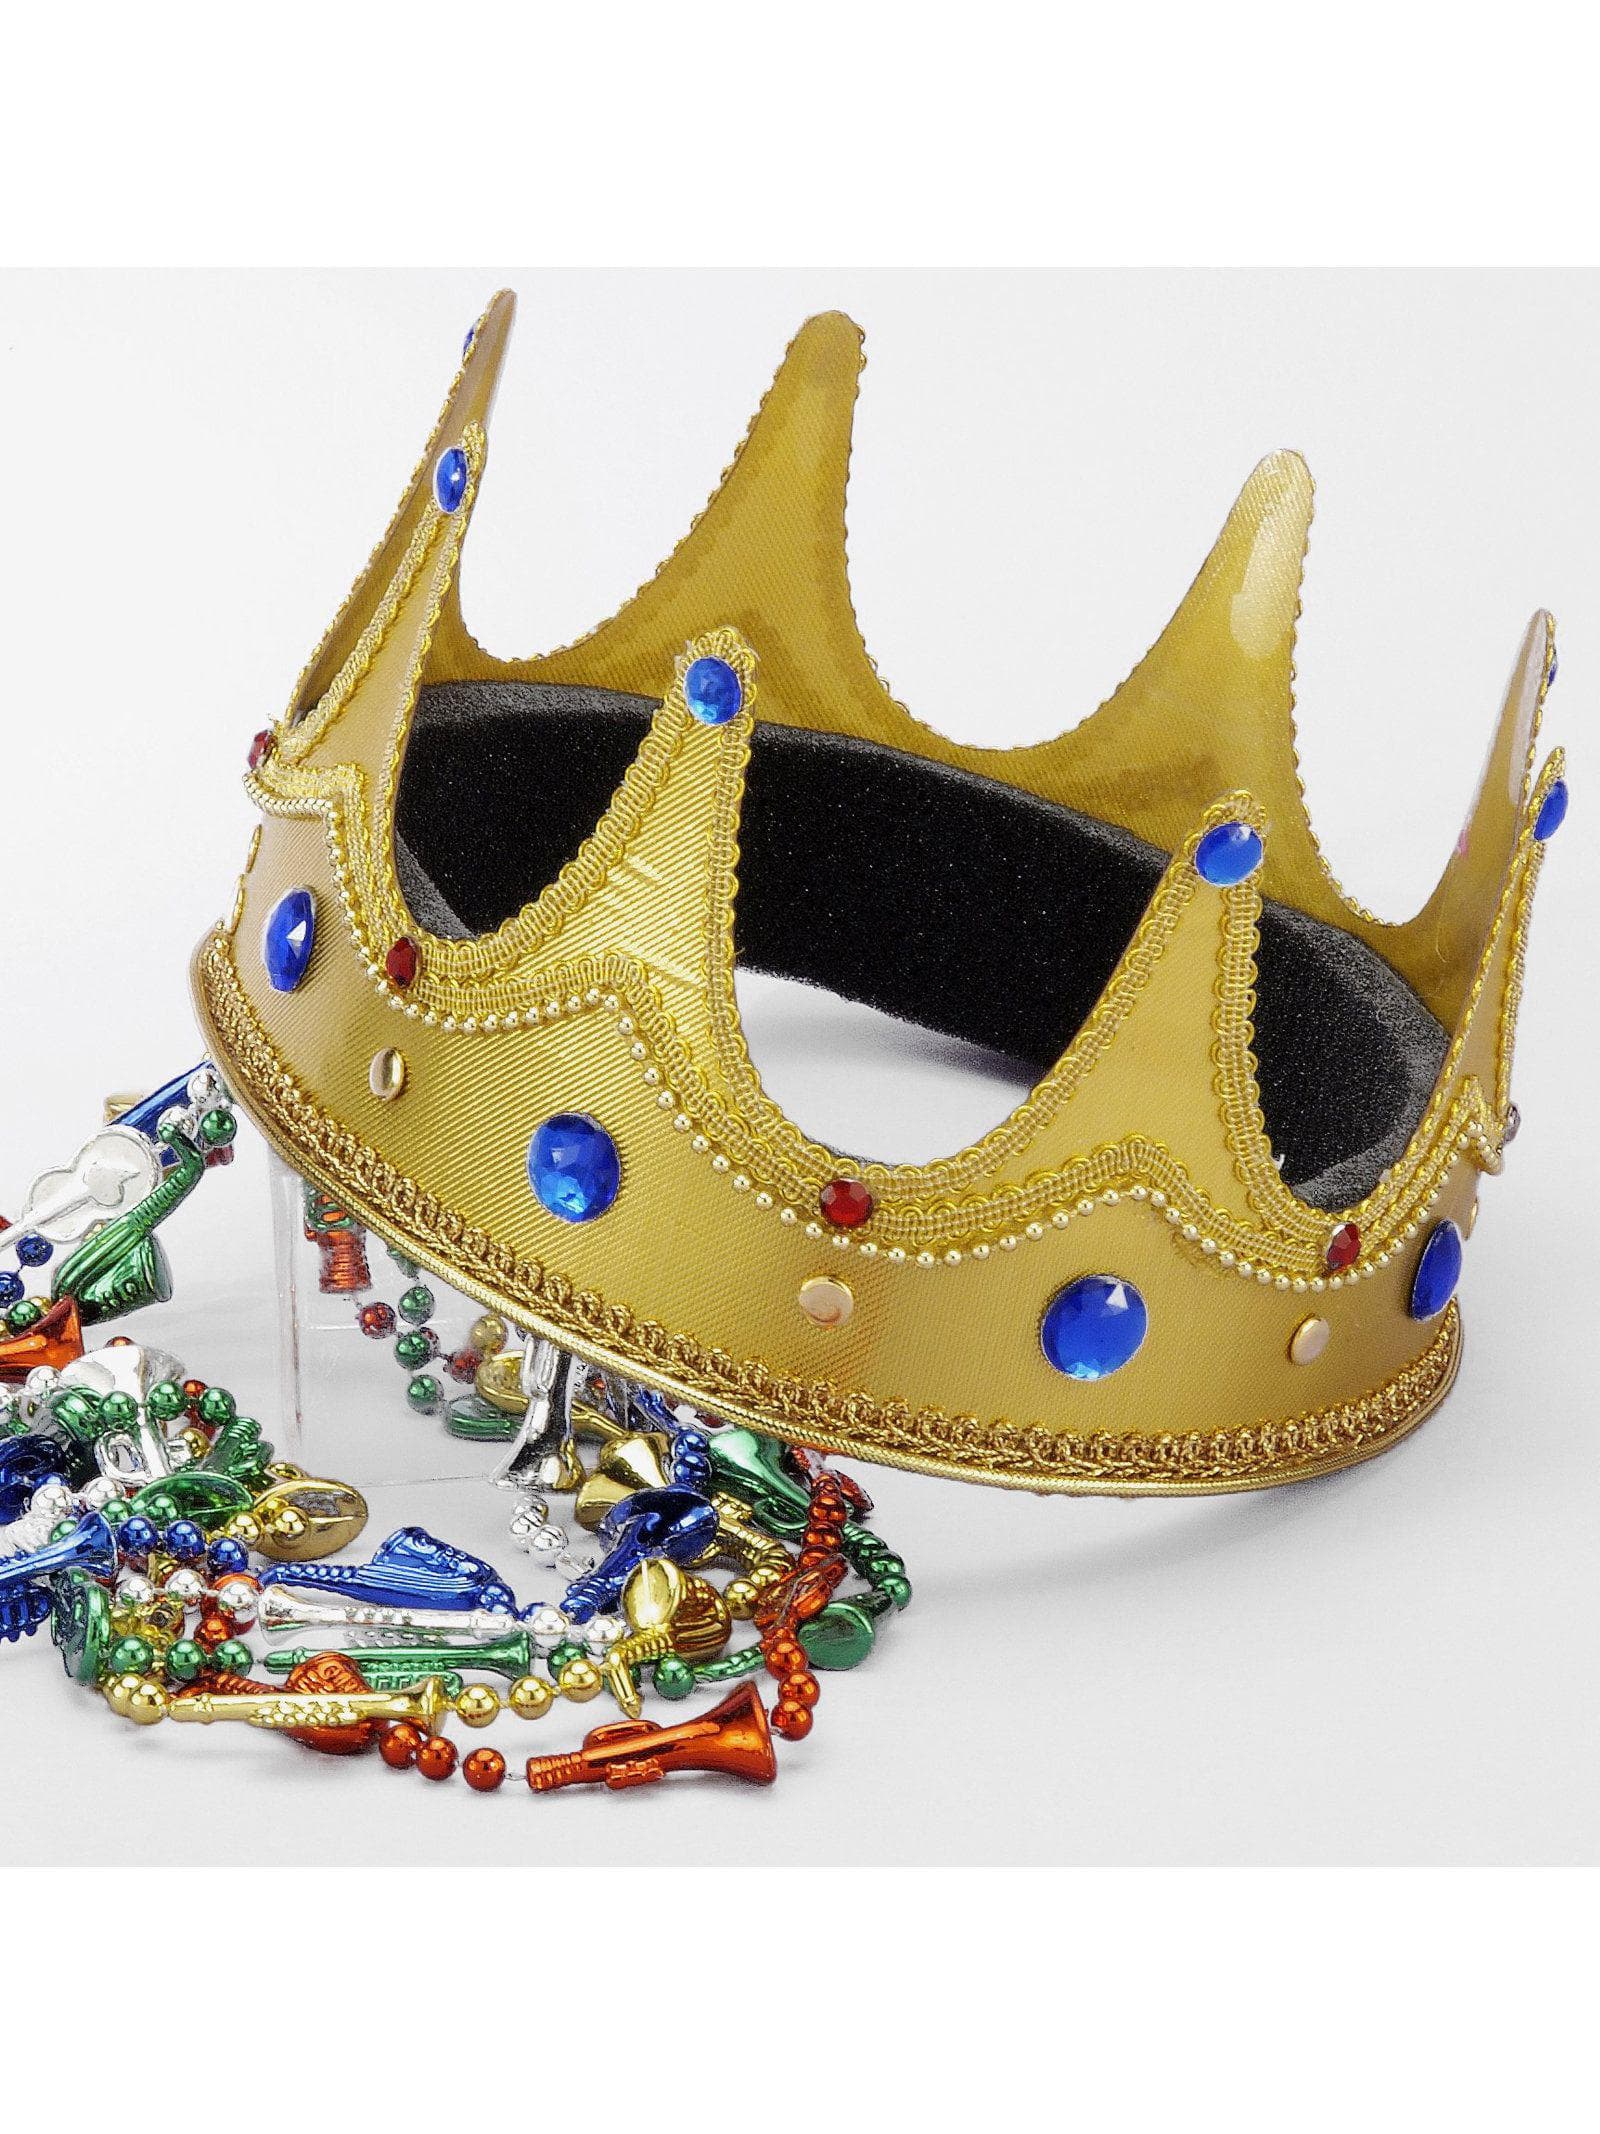 King Regal Crown - costumes.com